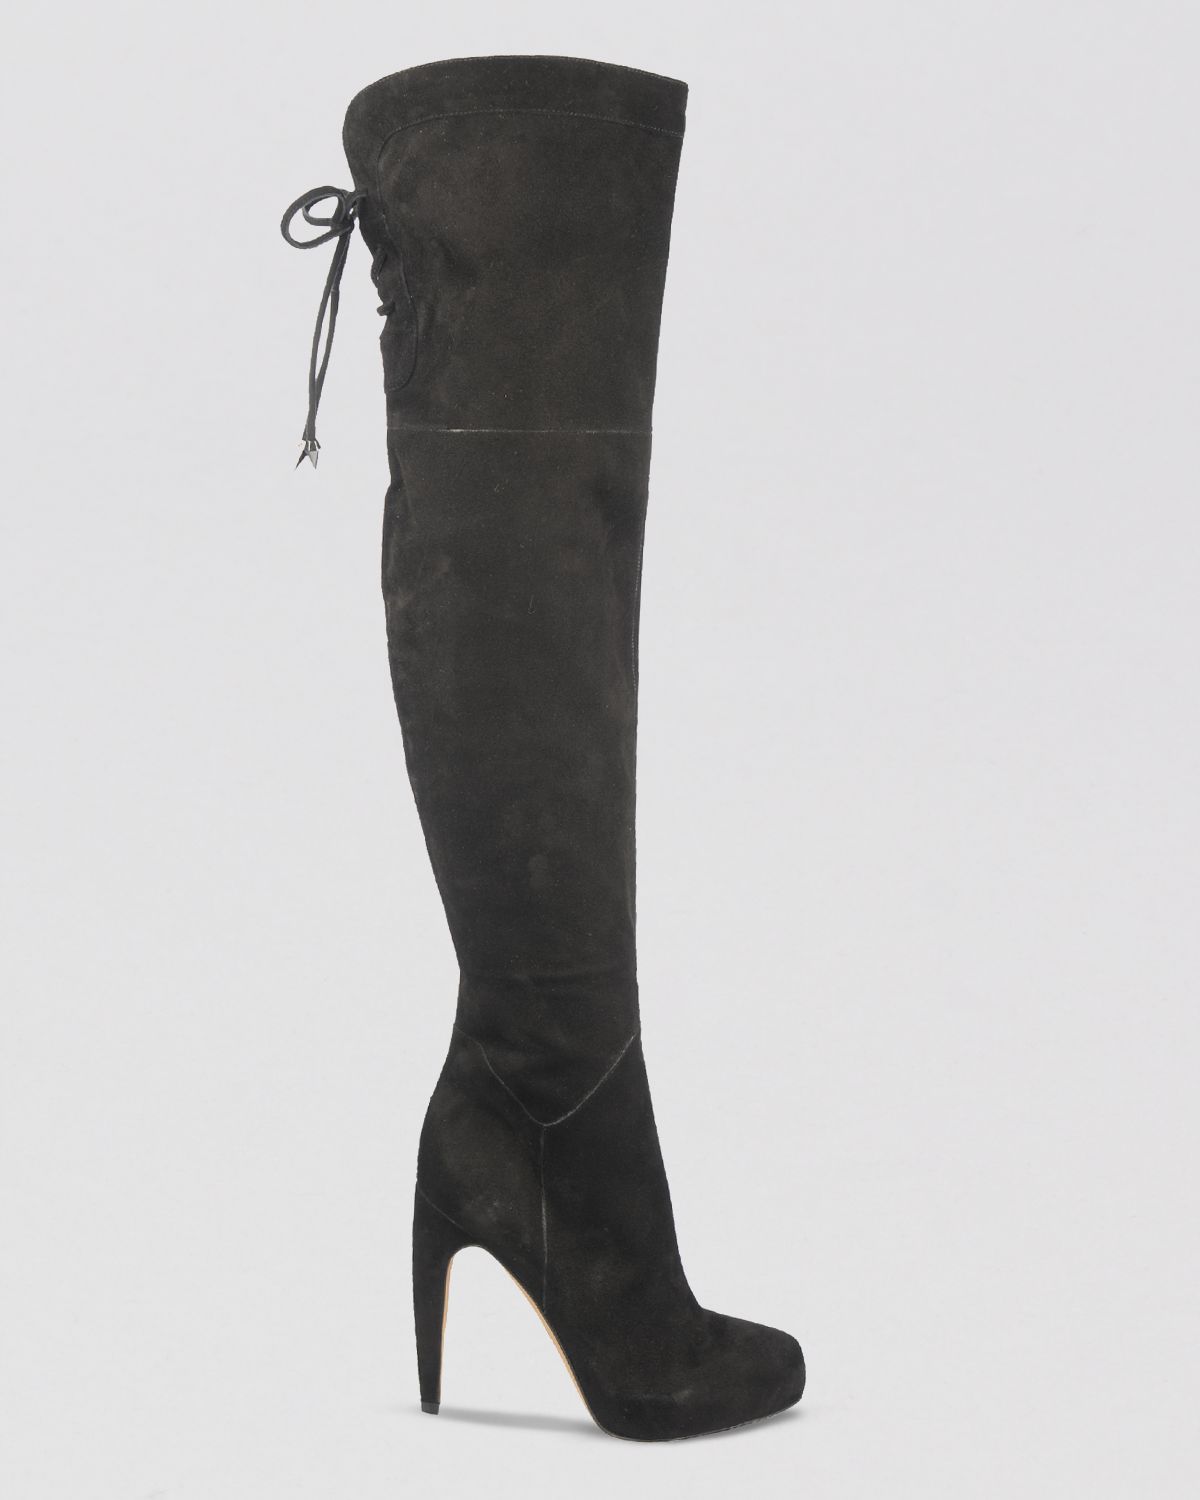 Lyst - Sam Edelman Over The Knee Dress Platform Boots - Kayla in Black